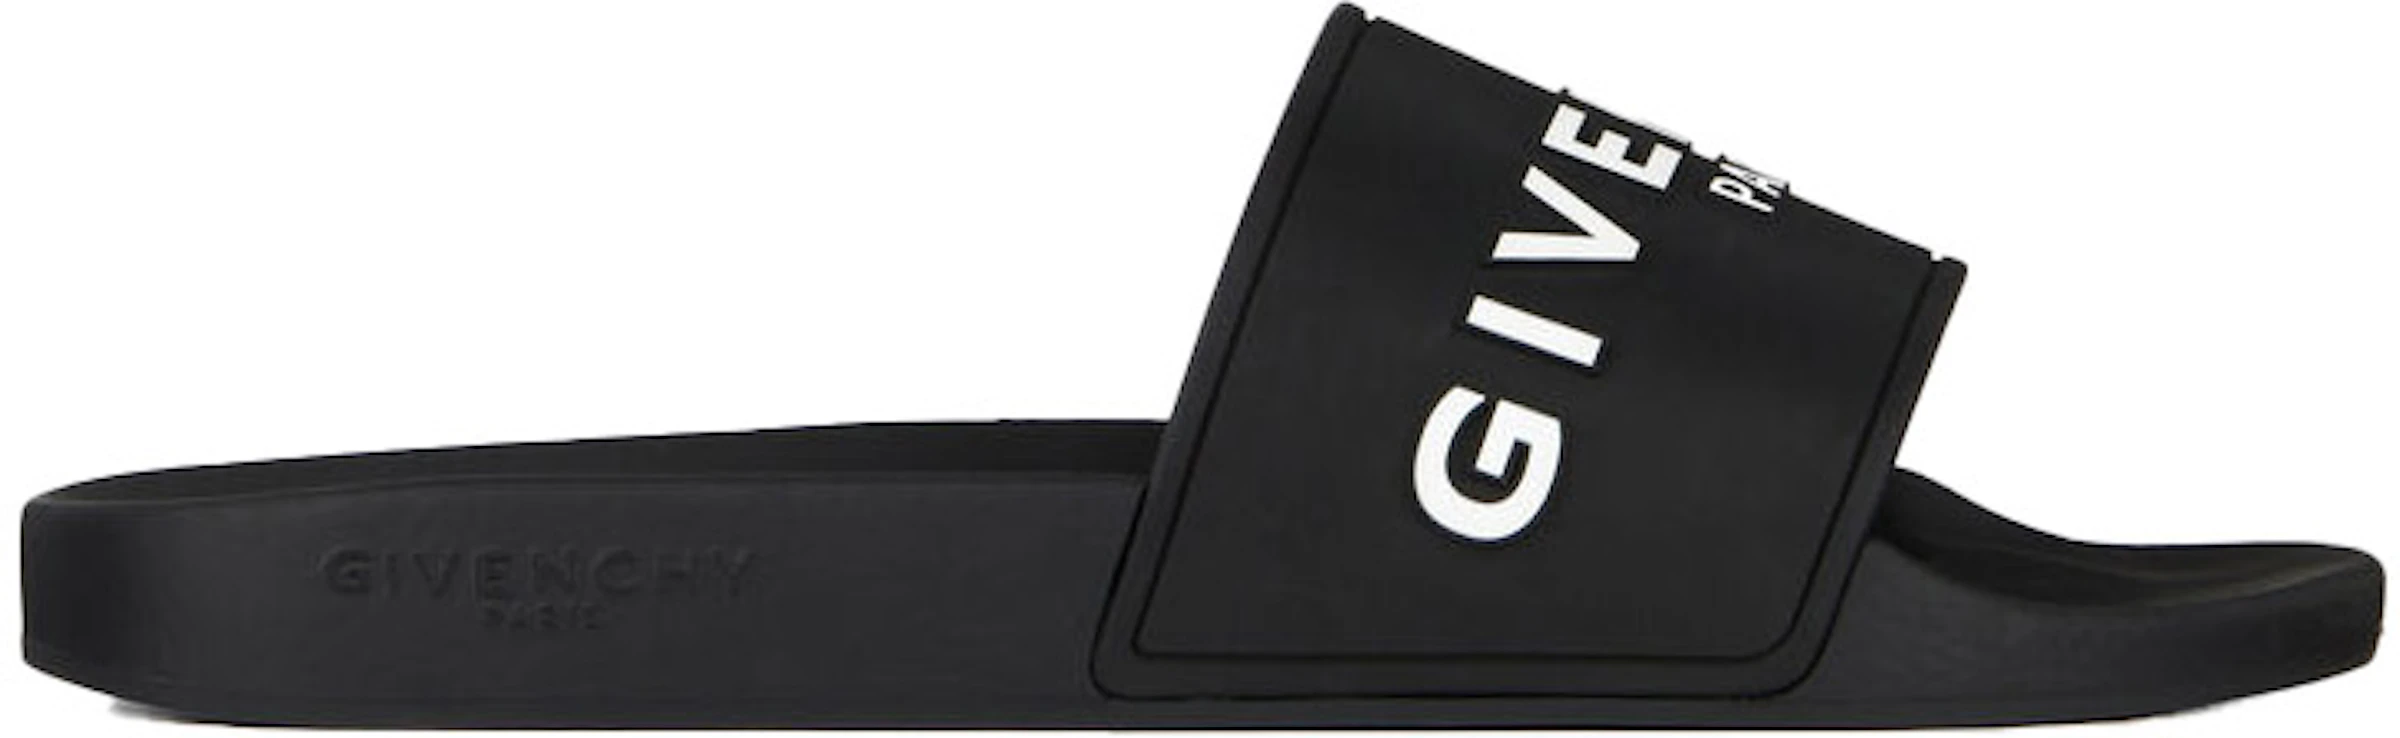 restante Artes literarias competencia Givenchy Paris Flat Sandals Black White - BH300HH0EP-001 - ES